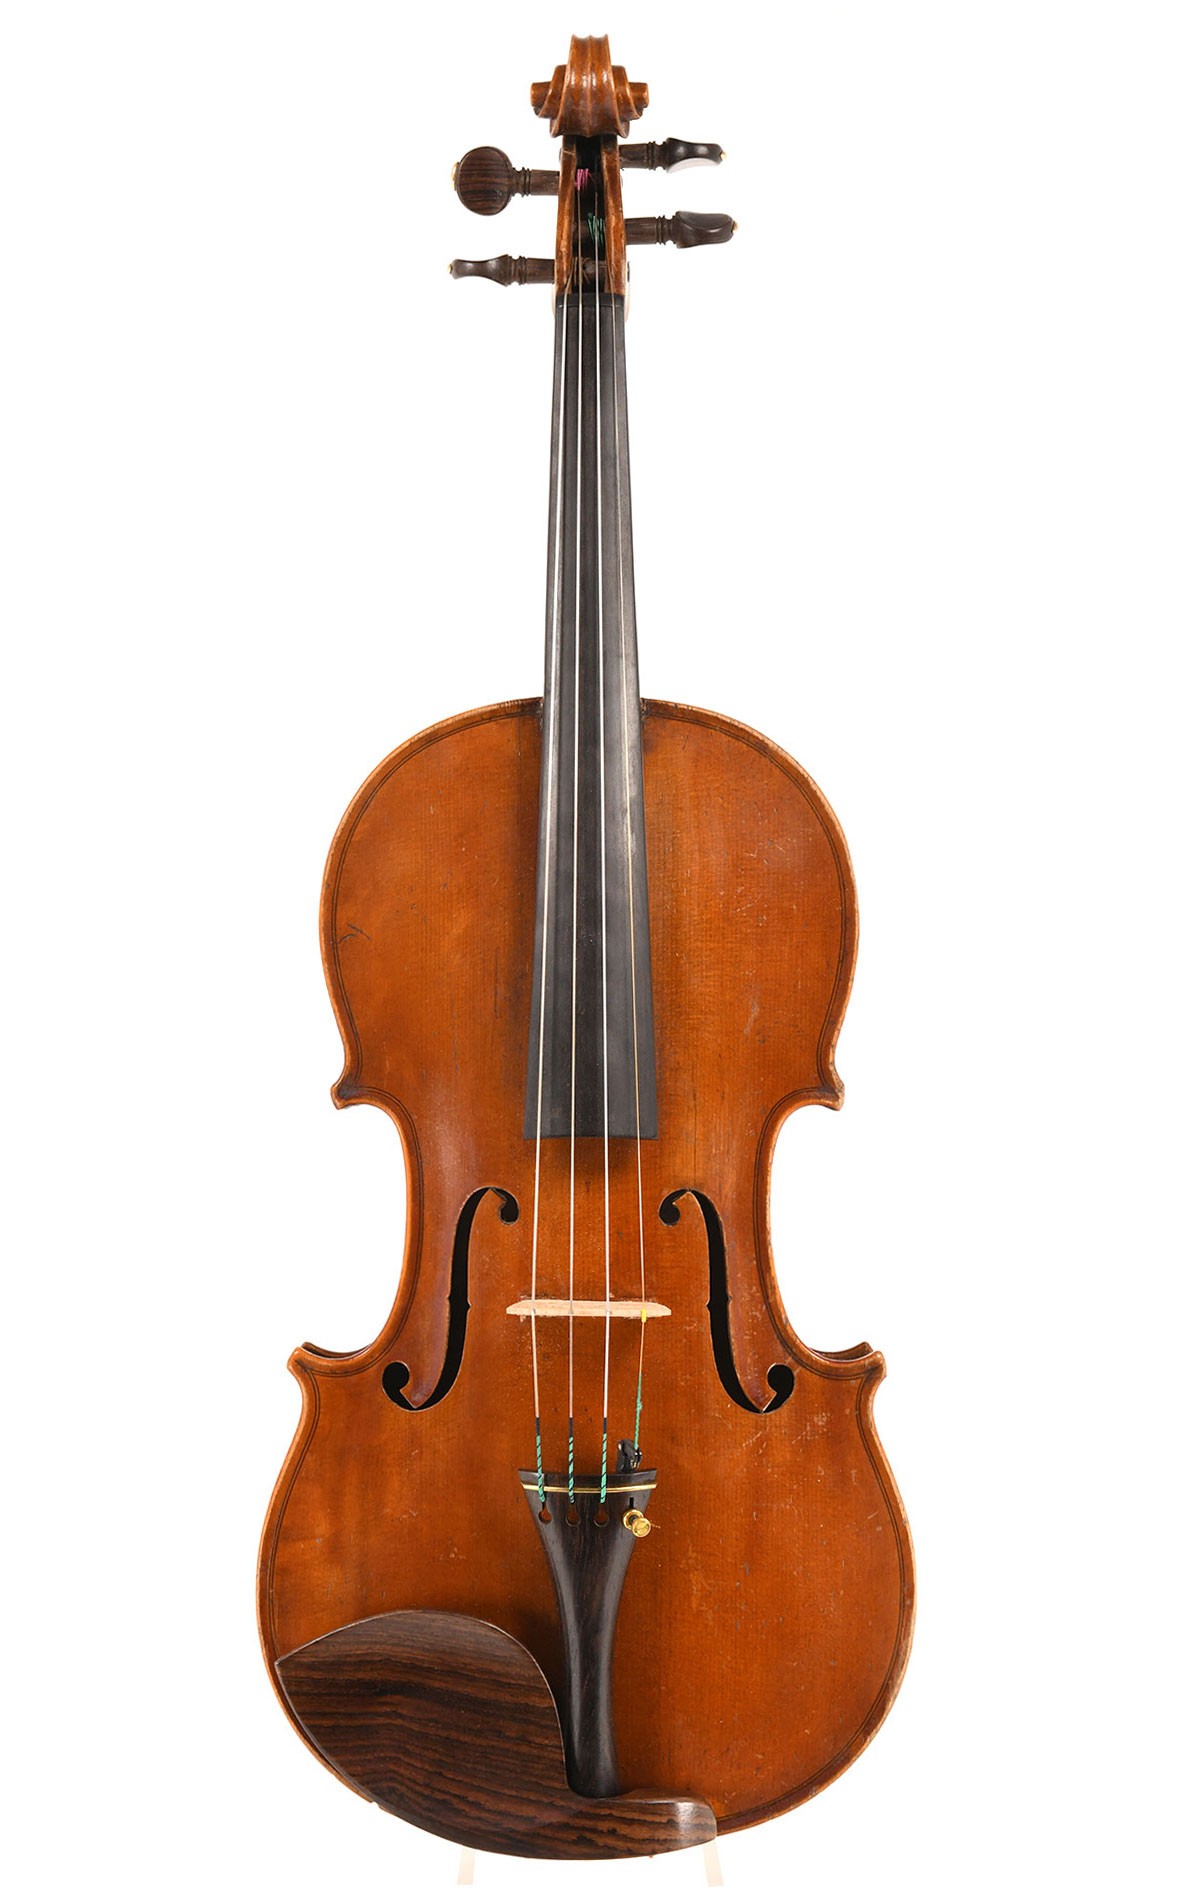 Violin by Nicolas Florentin from Mirecourt, built around 1800